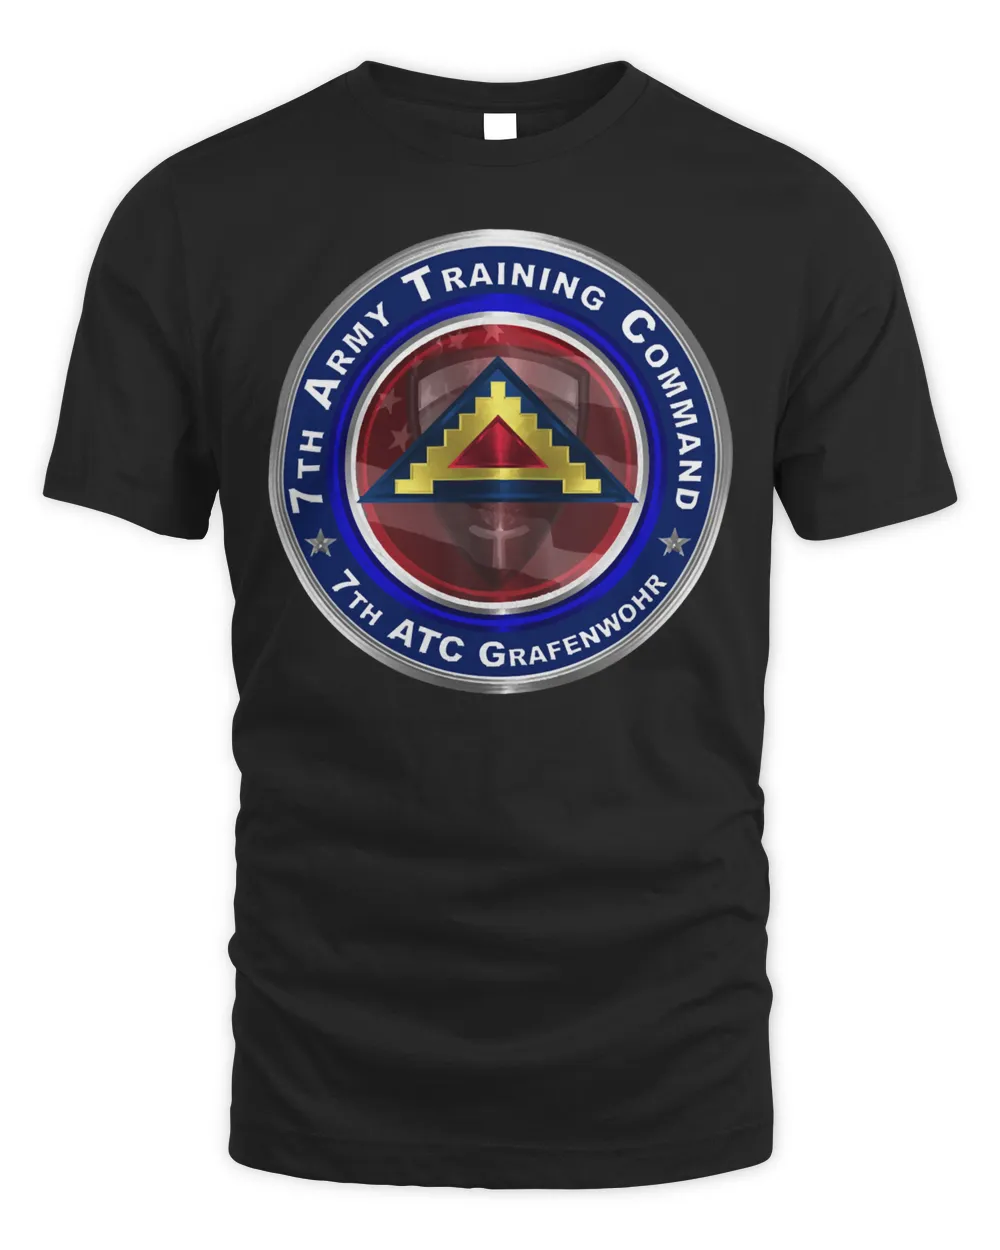 7th army training command (7th atc) t shirt